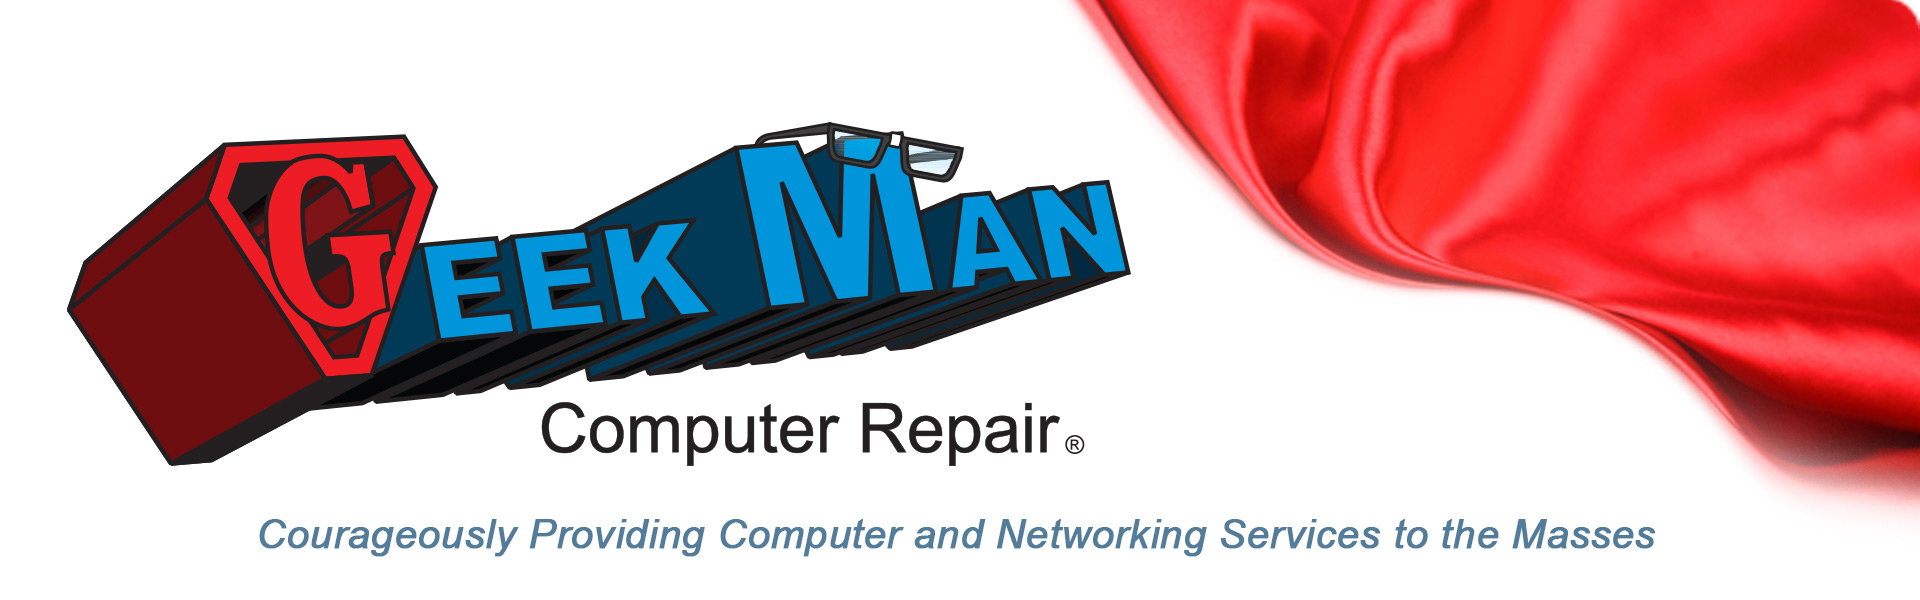 Sacramento Computer Repair | GeekMan Computer Repair®